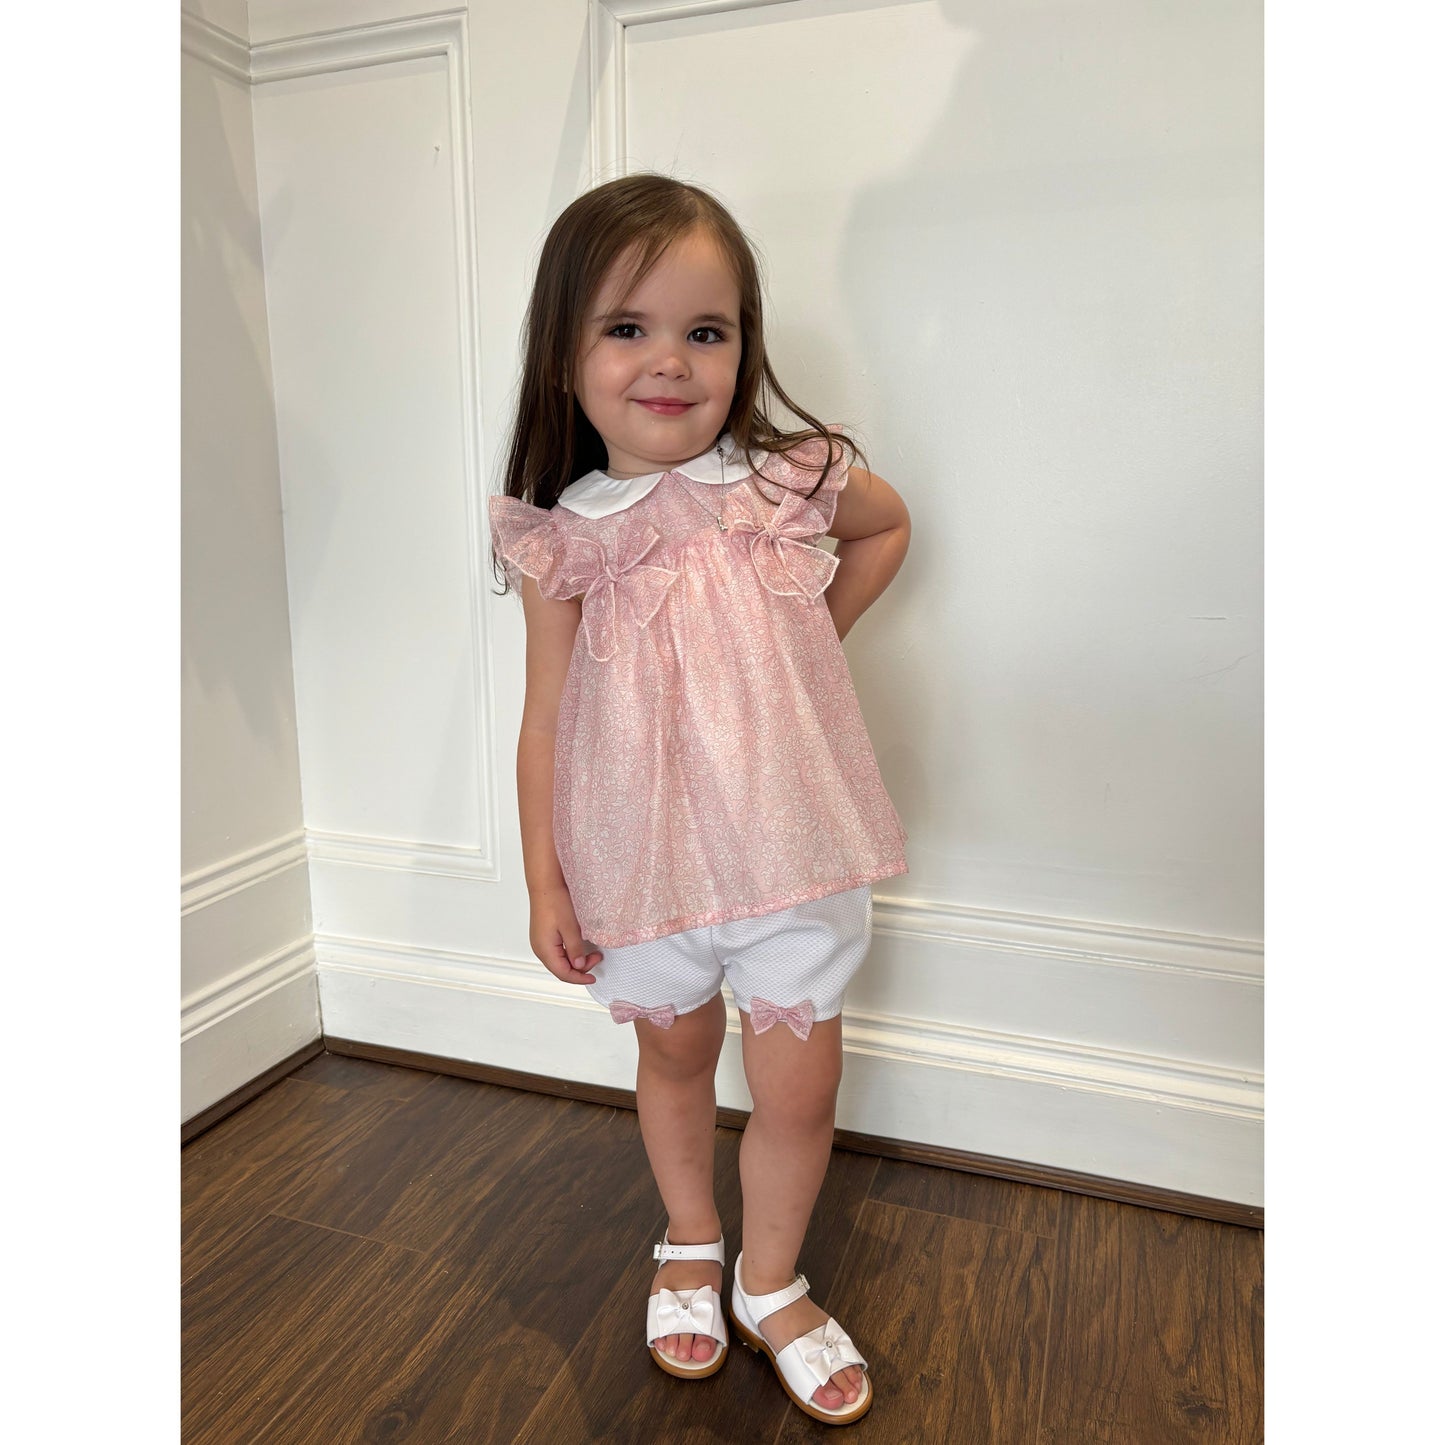 Baby girls pink chiffon blouse and white shorts by Piccola Speranza - Adora Childrenswear 